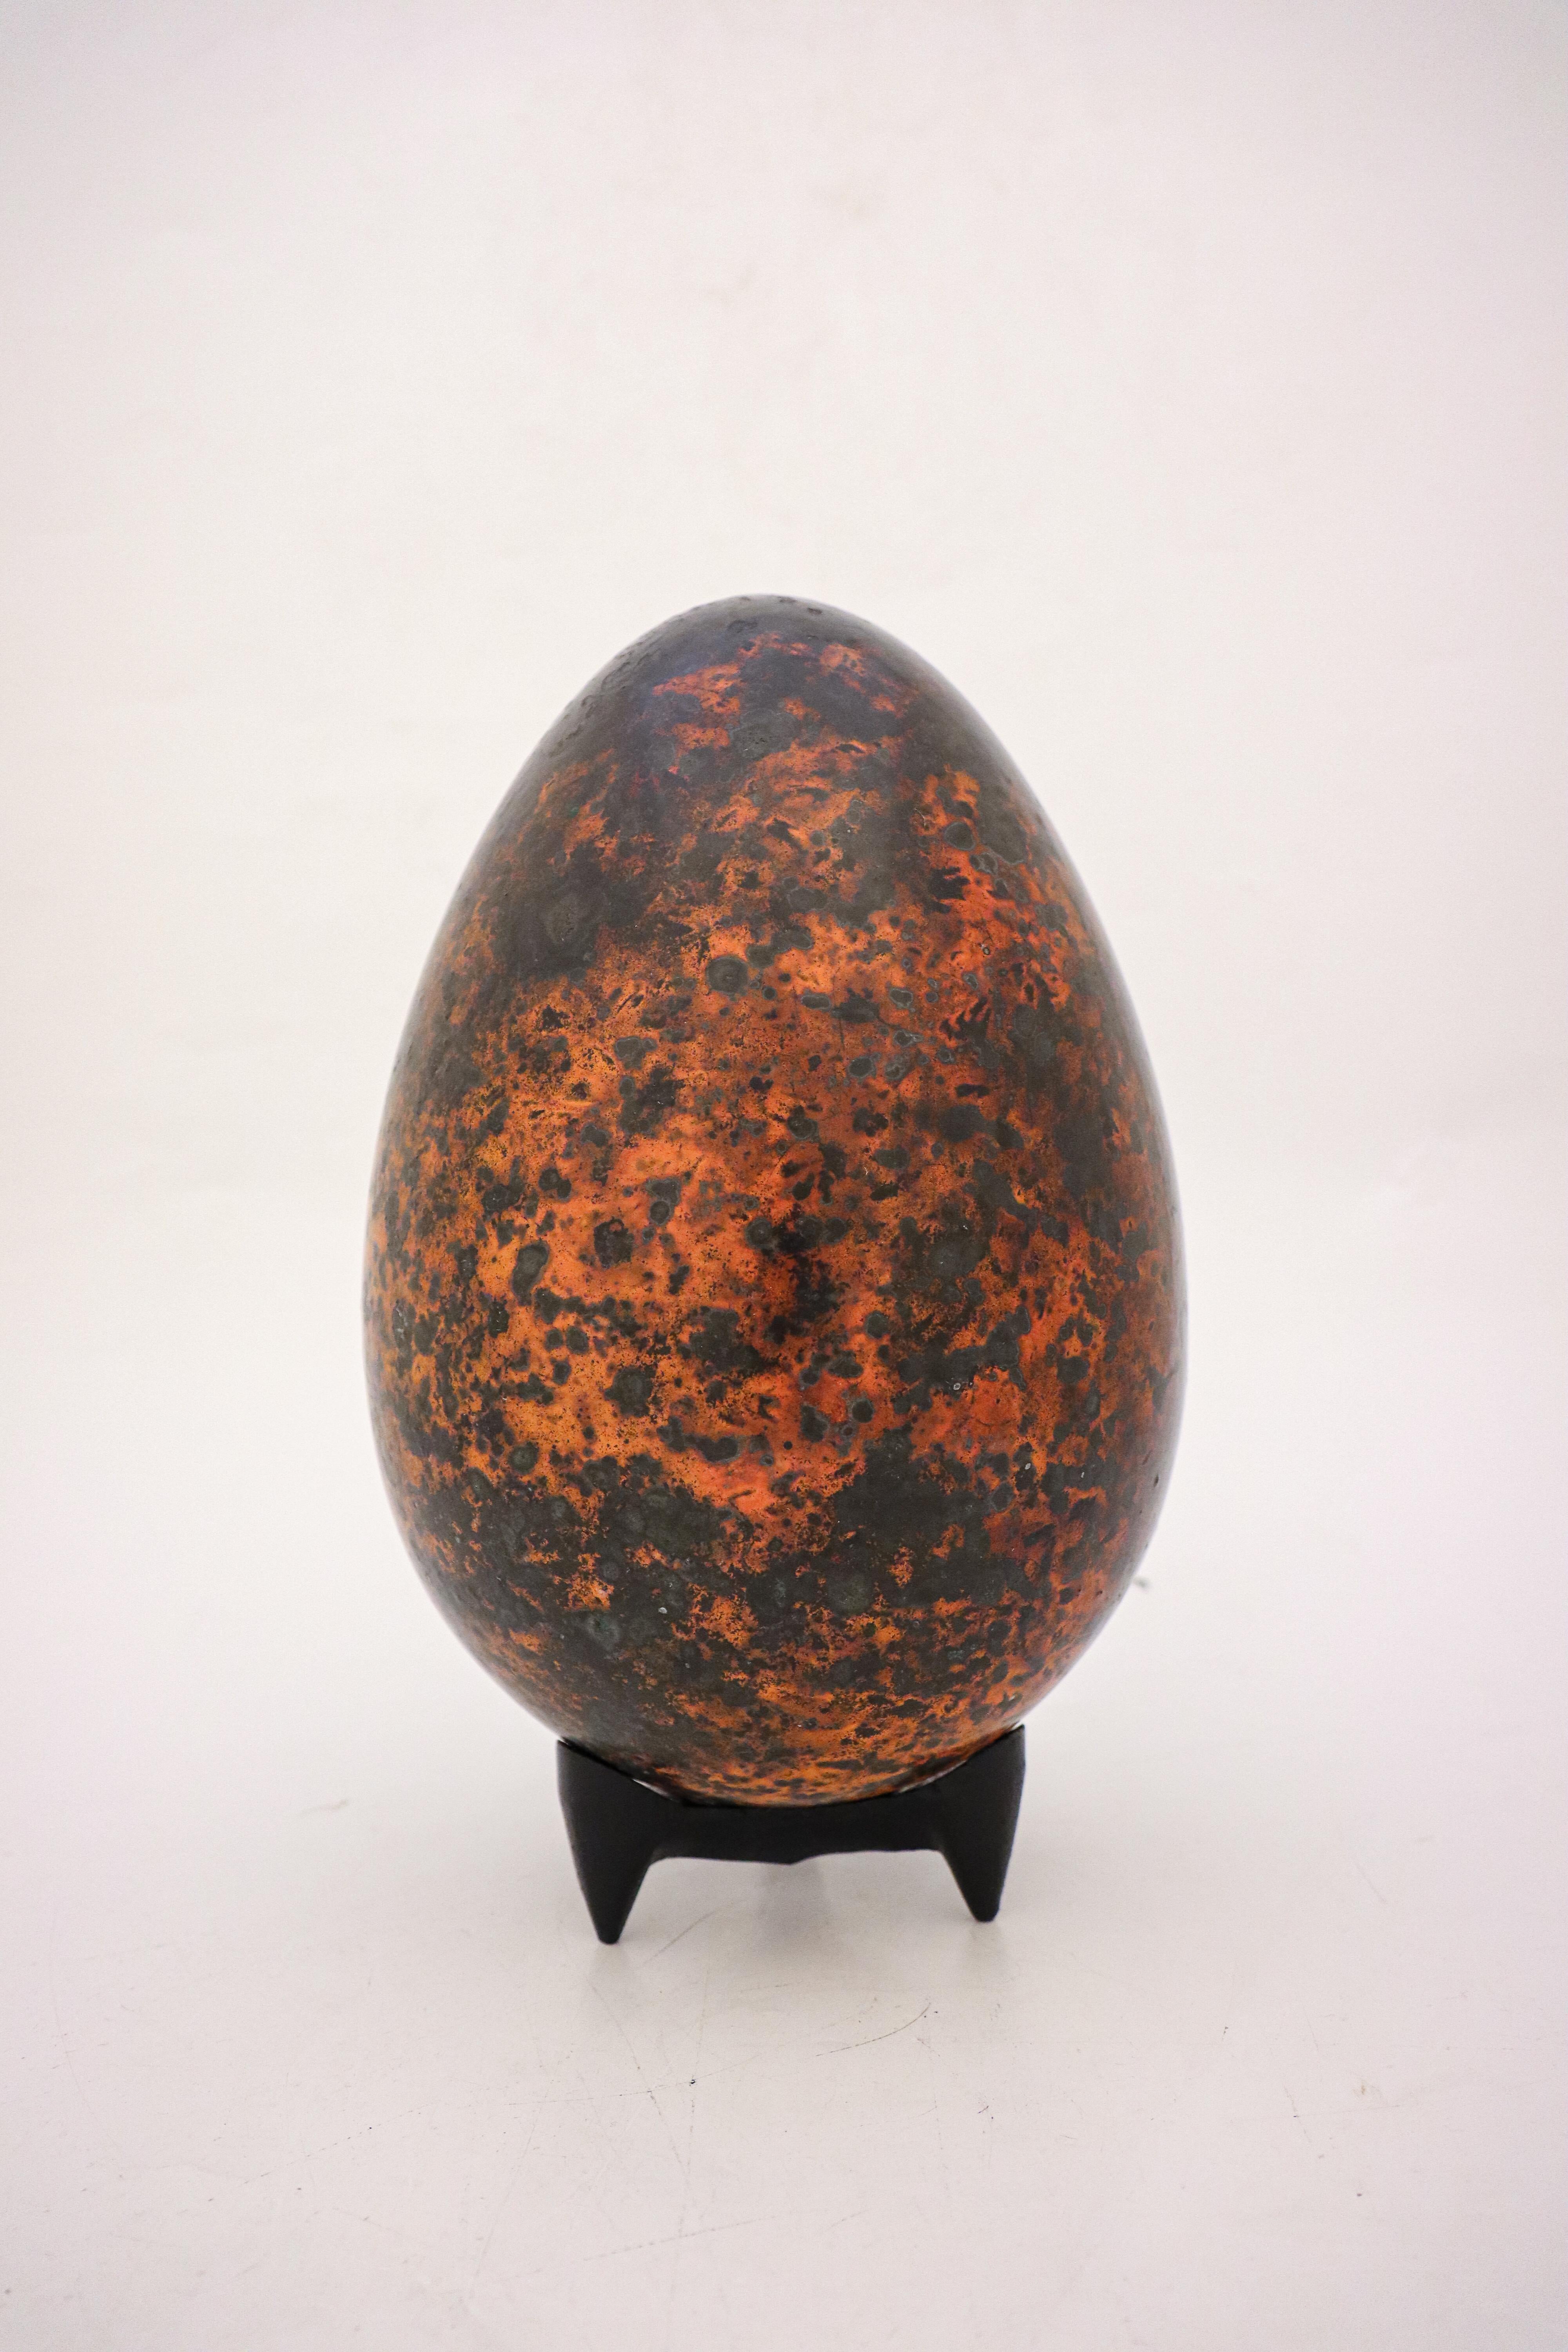 Glazed Stoneware Sculpture Egg Orange & Black-Tone Glaze by Hans Hedberg, Biot, France